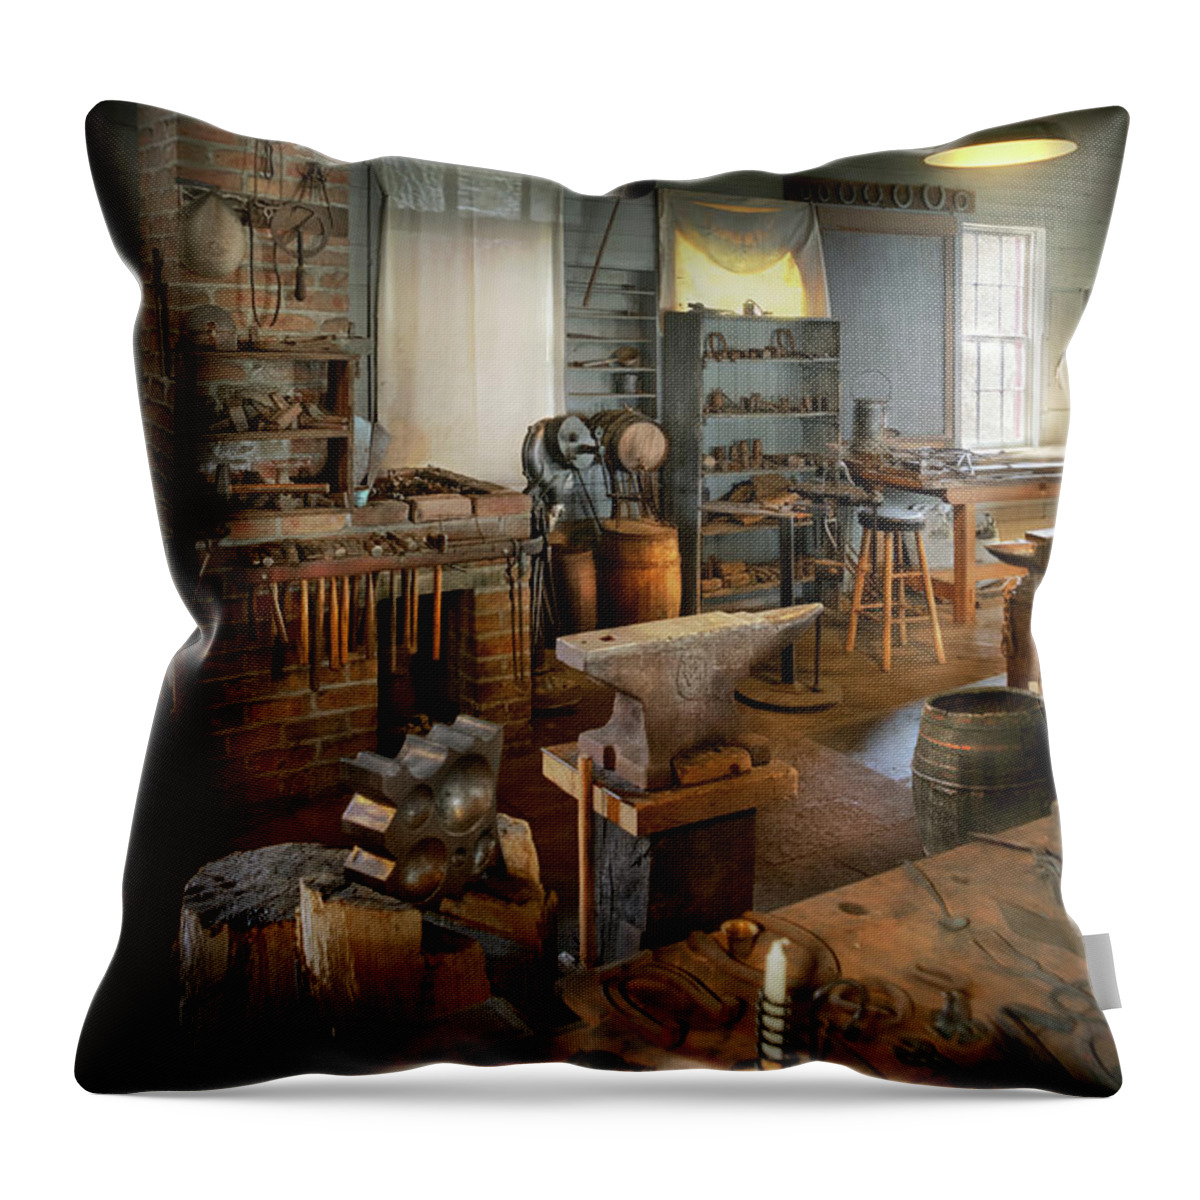 Blacksmith Throw Pillow featuring the photograph Blacksmith - The creative art of blacksmithing by Mike Savad